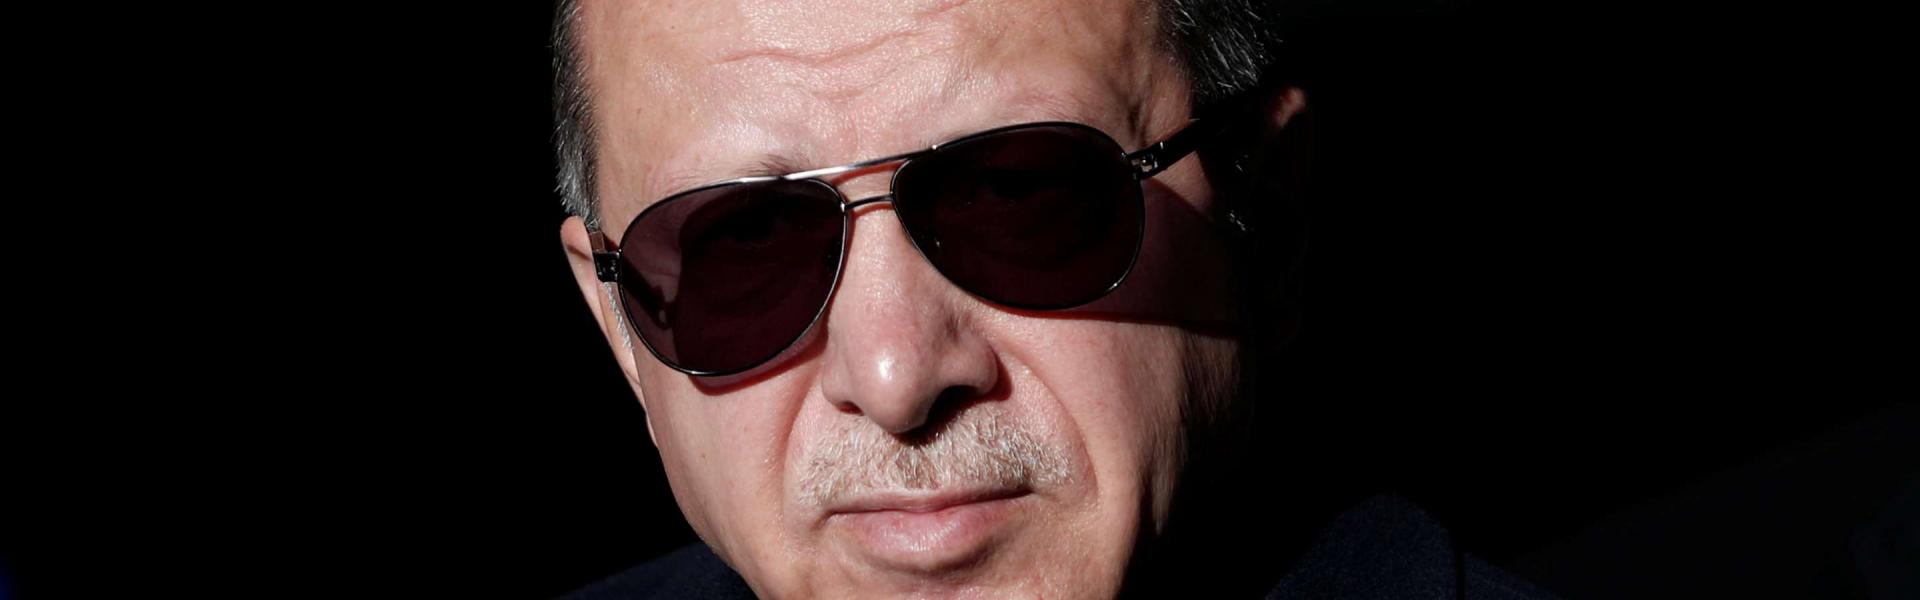 How Erdoğan failed to make Turkey great again - analyst 2